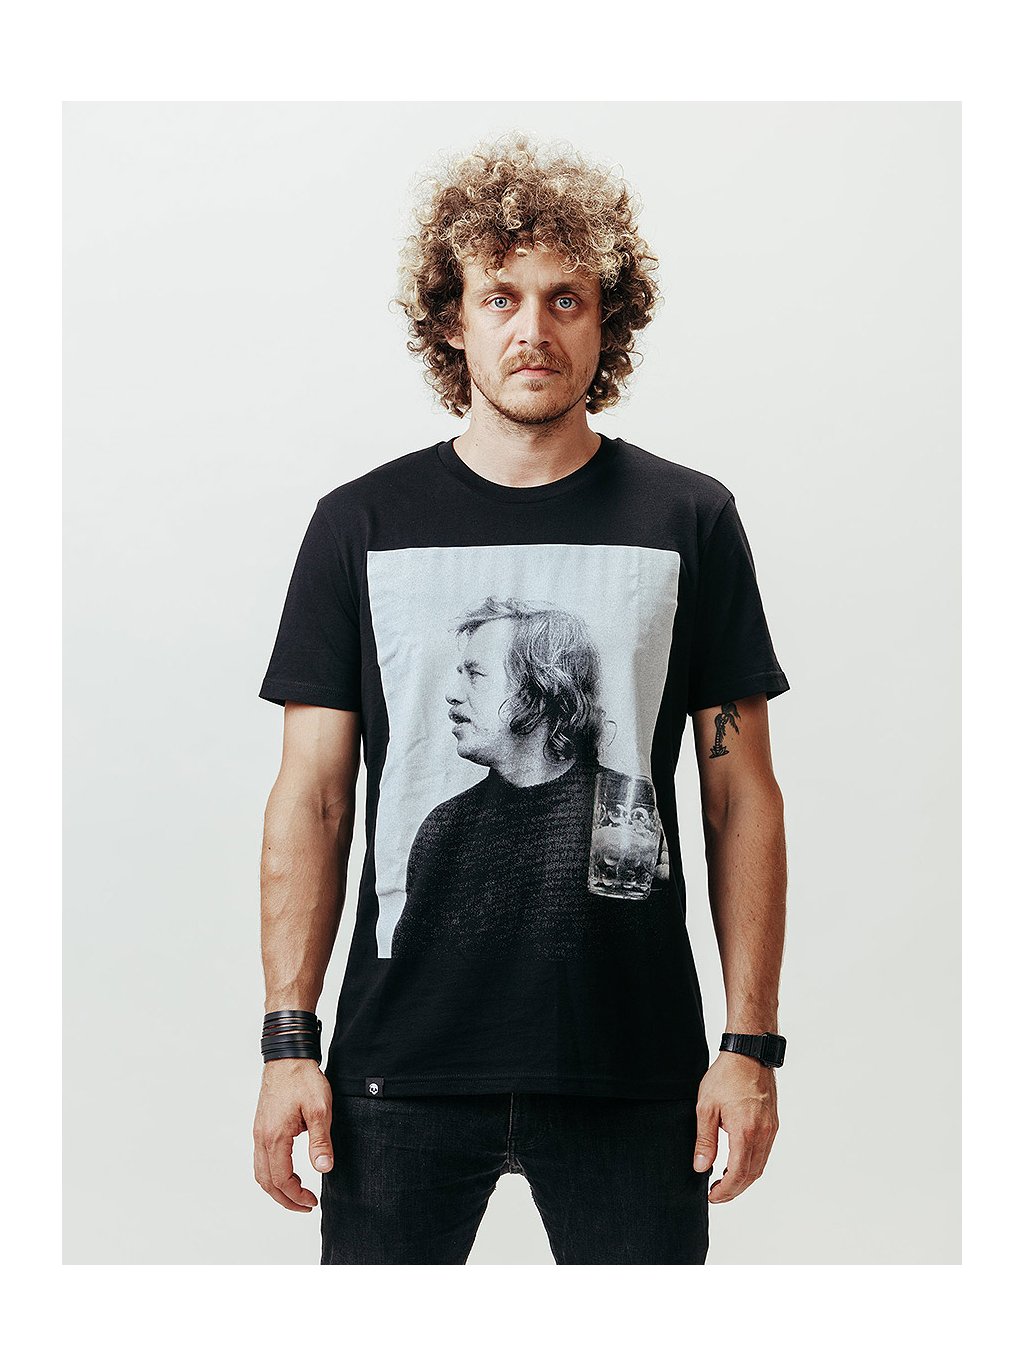 Havel na Hrad T-Shirt - Never Enough Ltd. Enough Ltd. - Streetwear